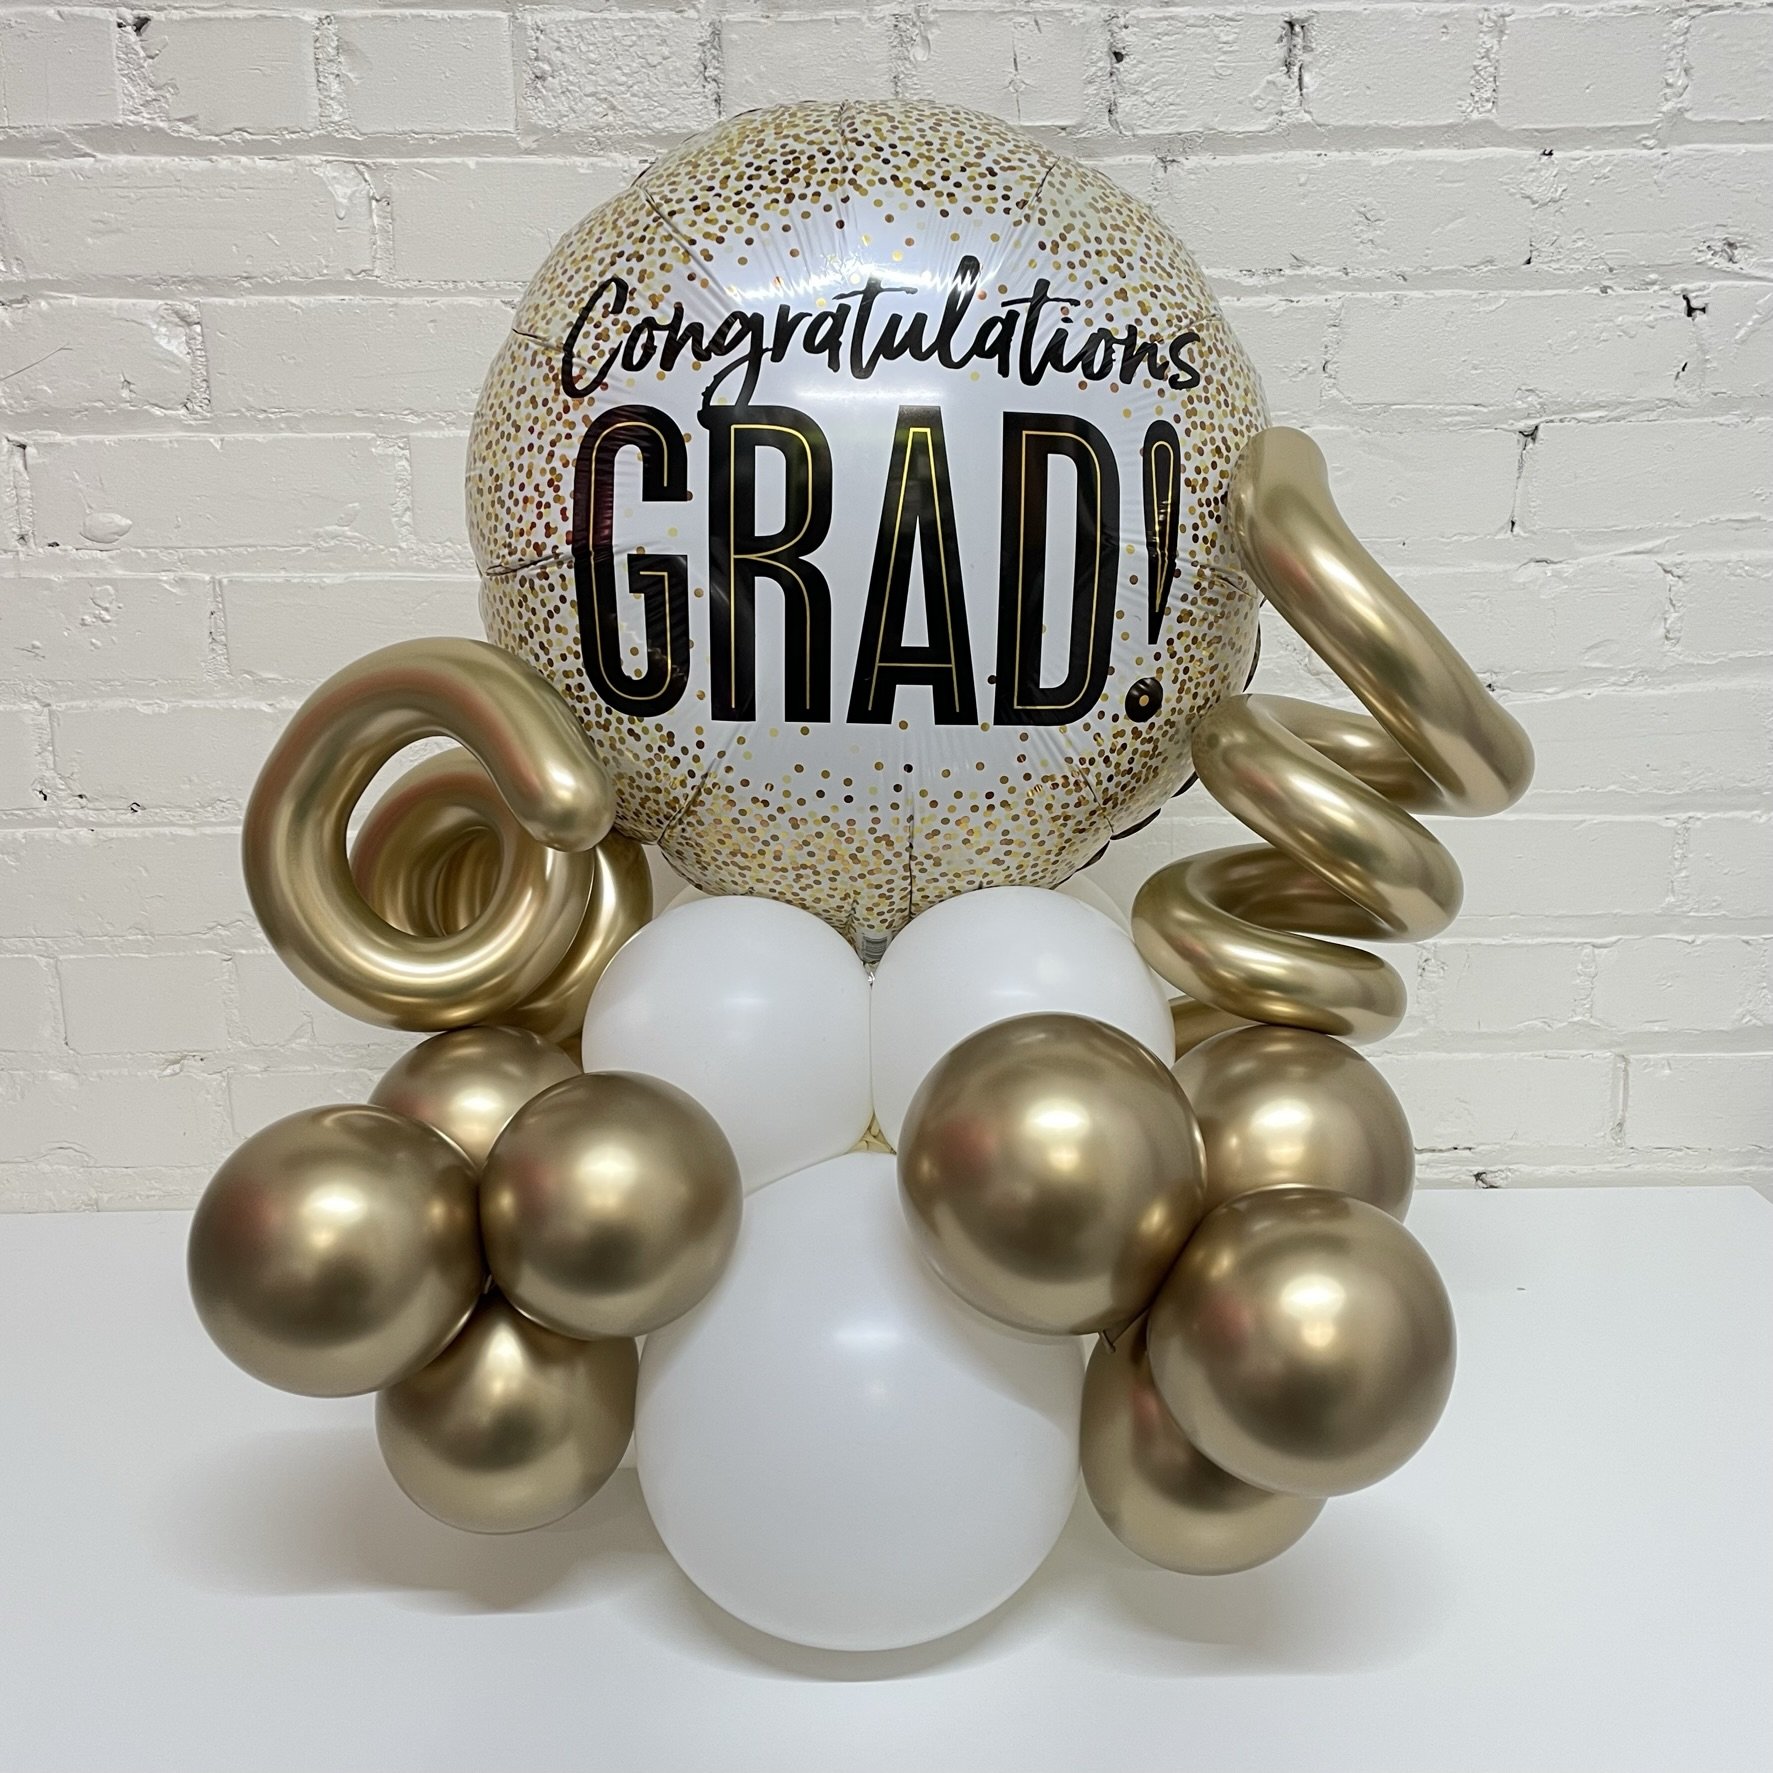 Congratulations grad centerpiece.jpeg